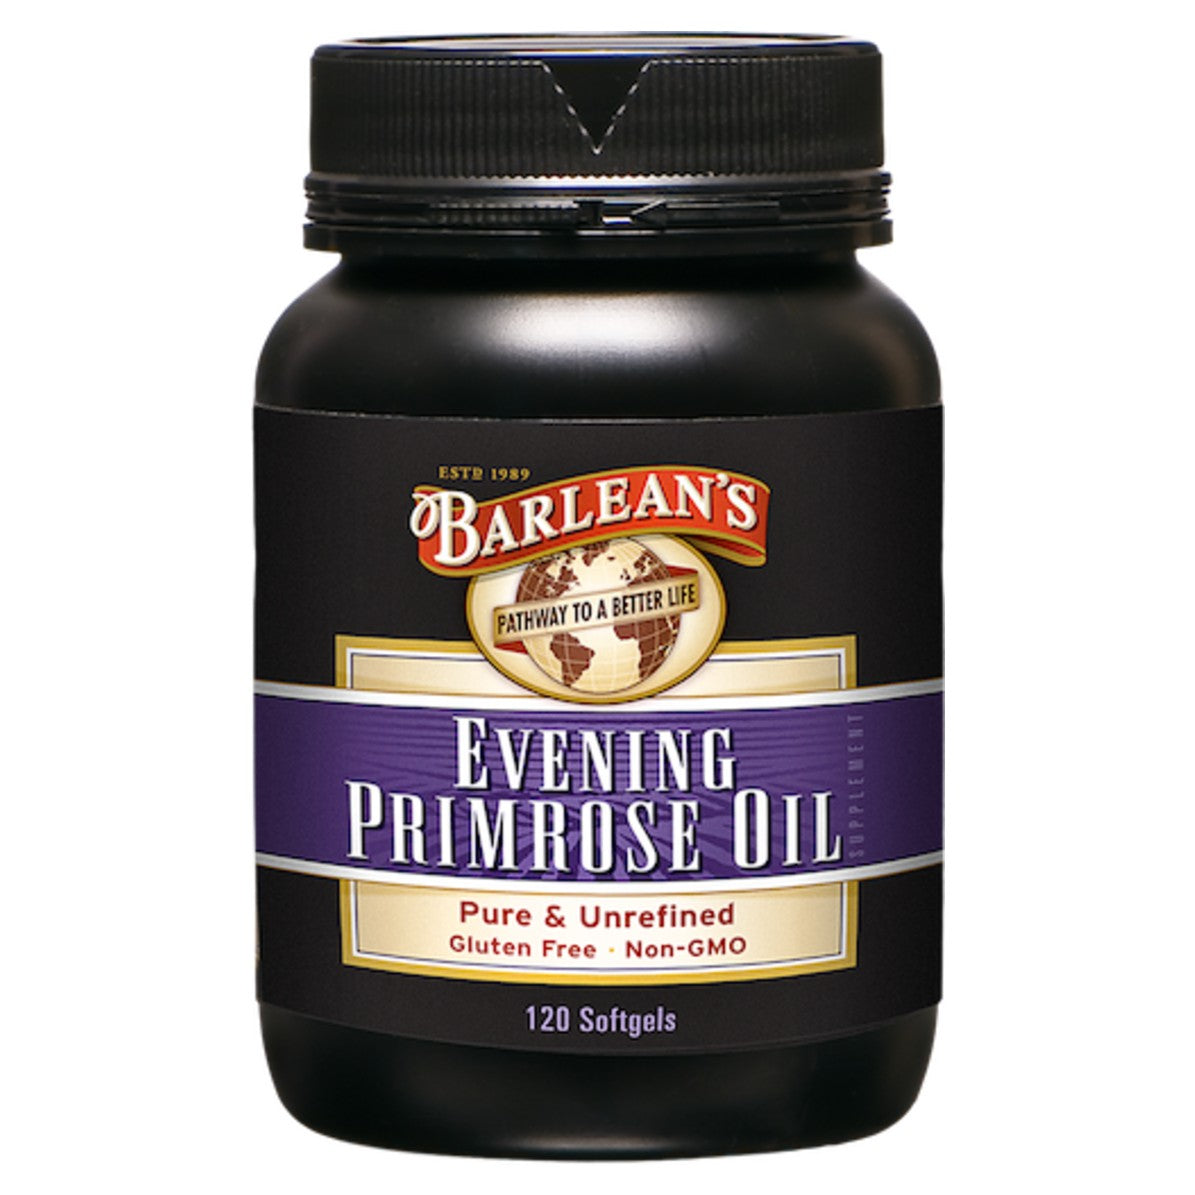 Evening Primrose Oil - Barleans